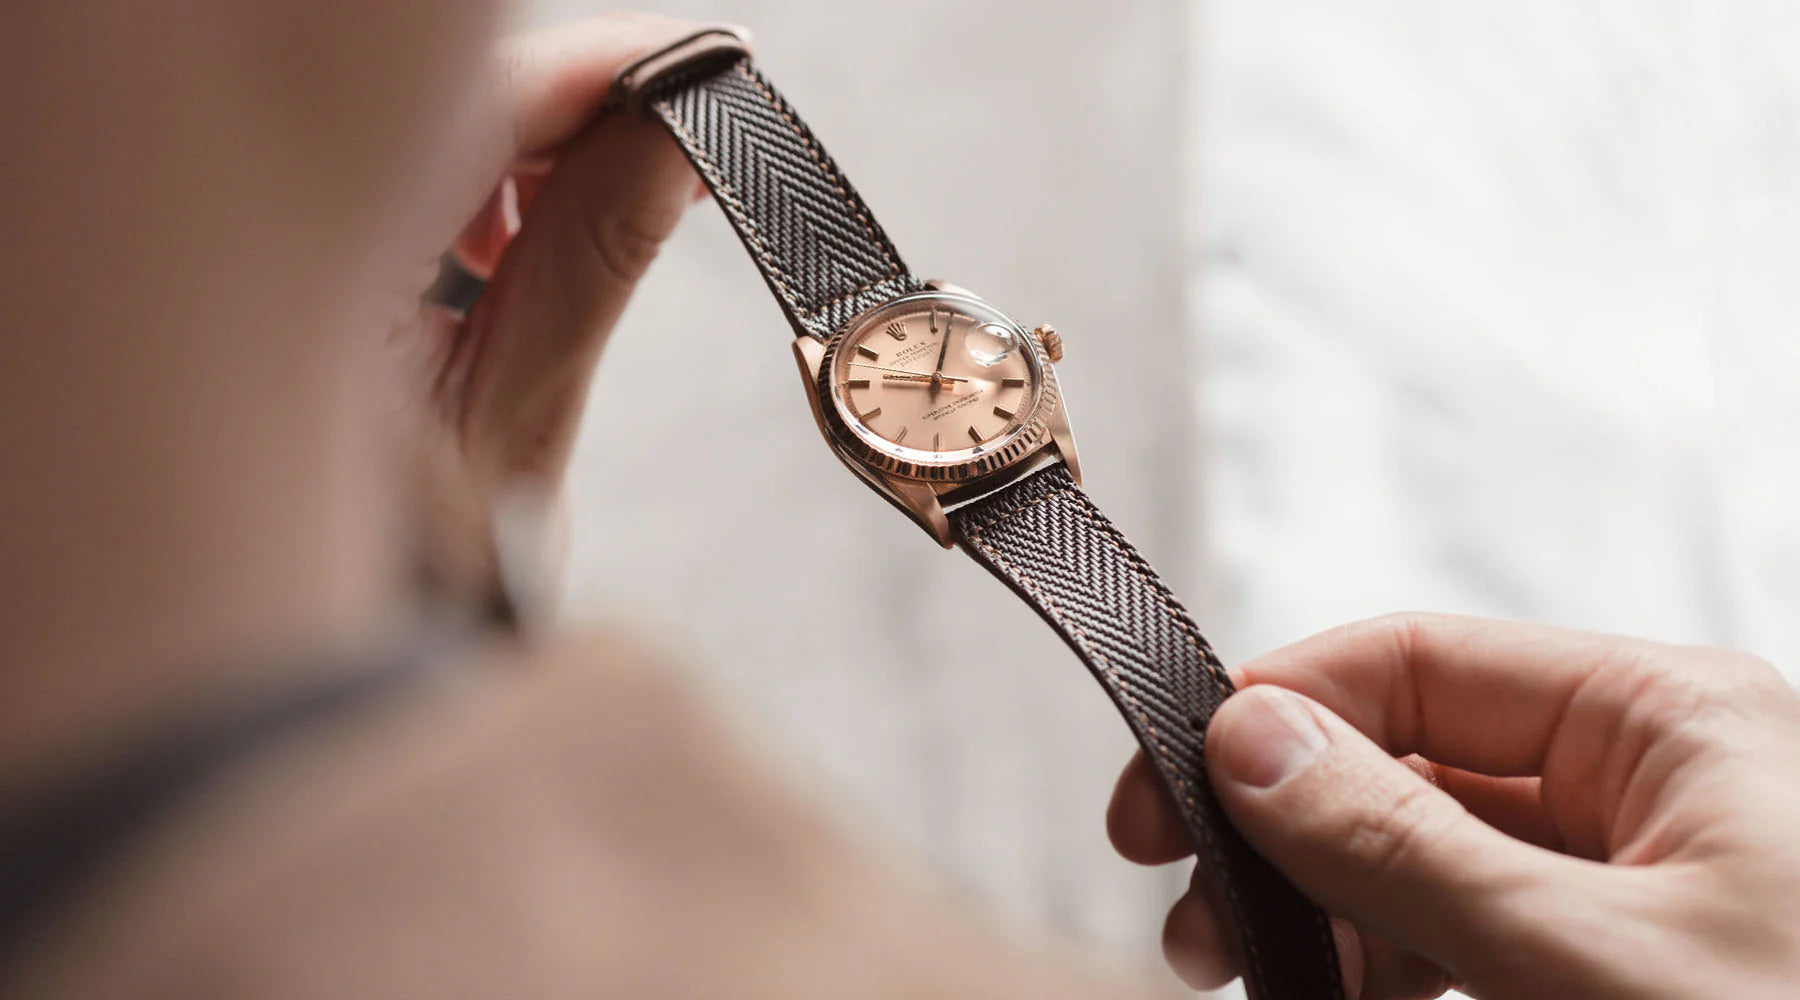 The Limited Edition ManhattanRollie Watch Strap - Celebrating Friendship and Craftsmanship